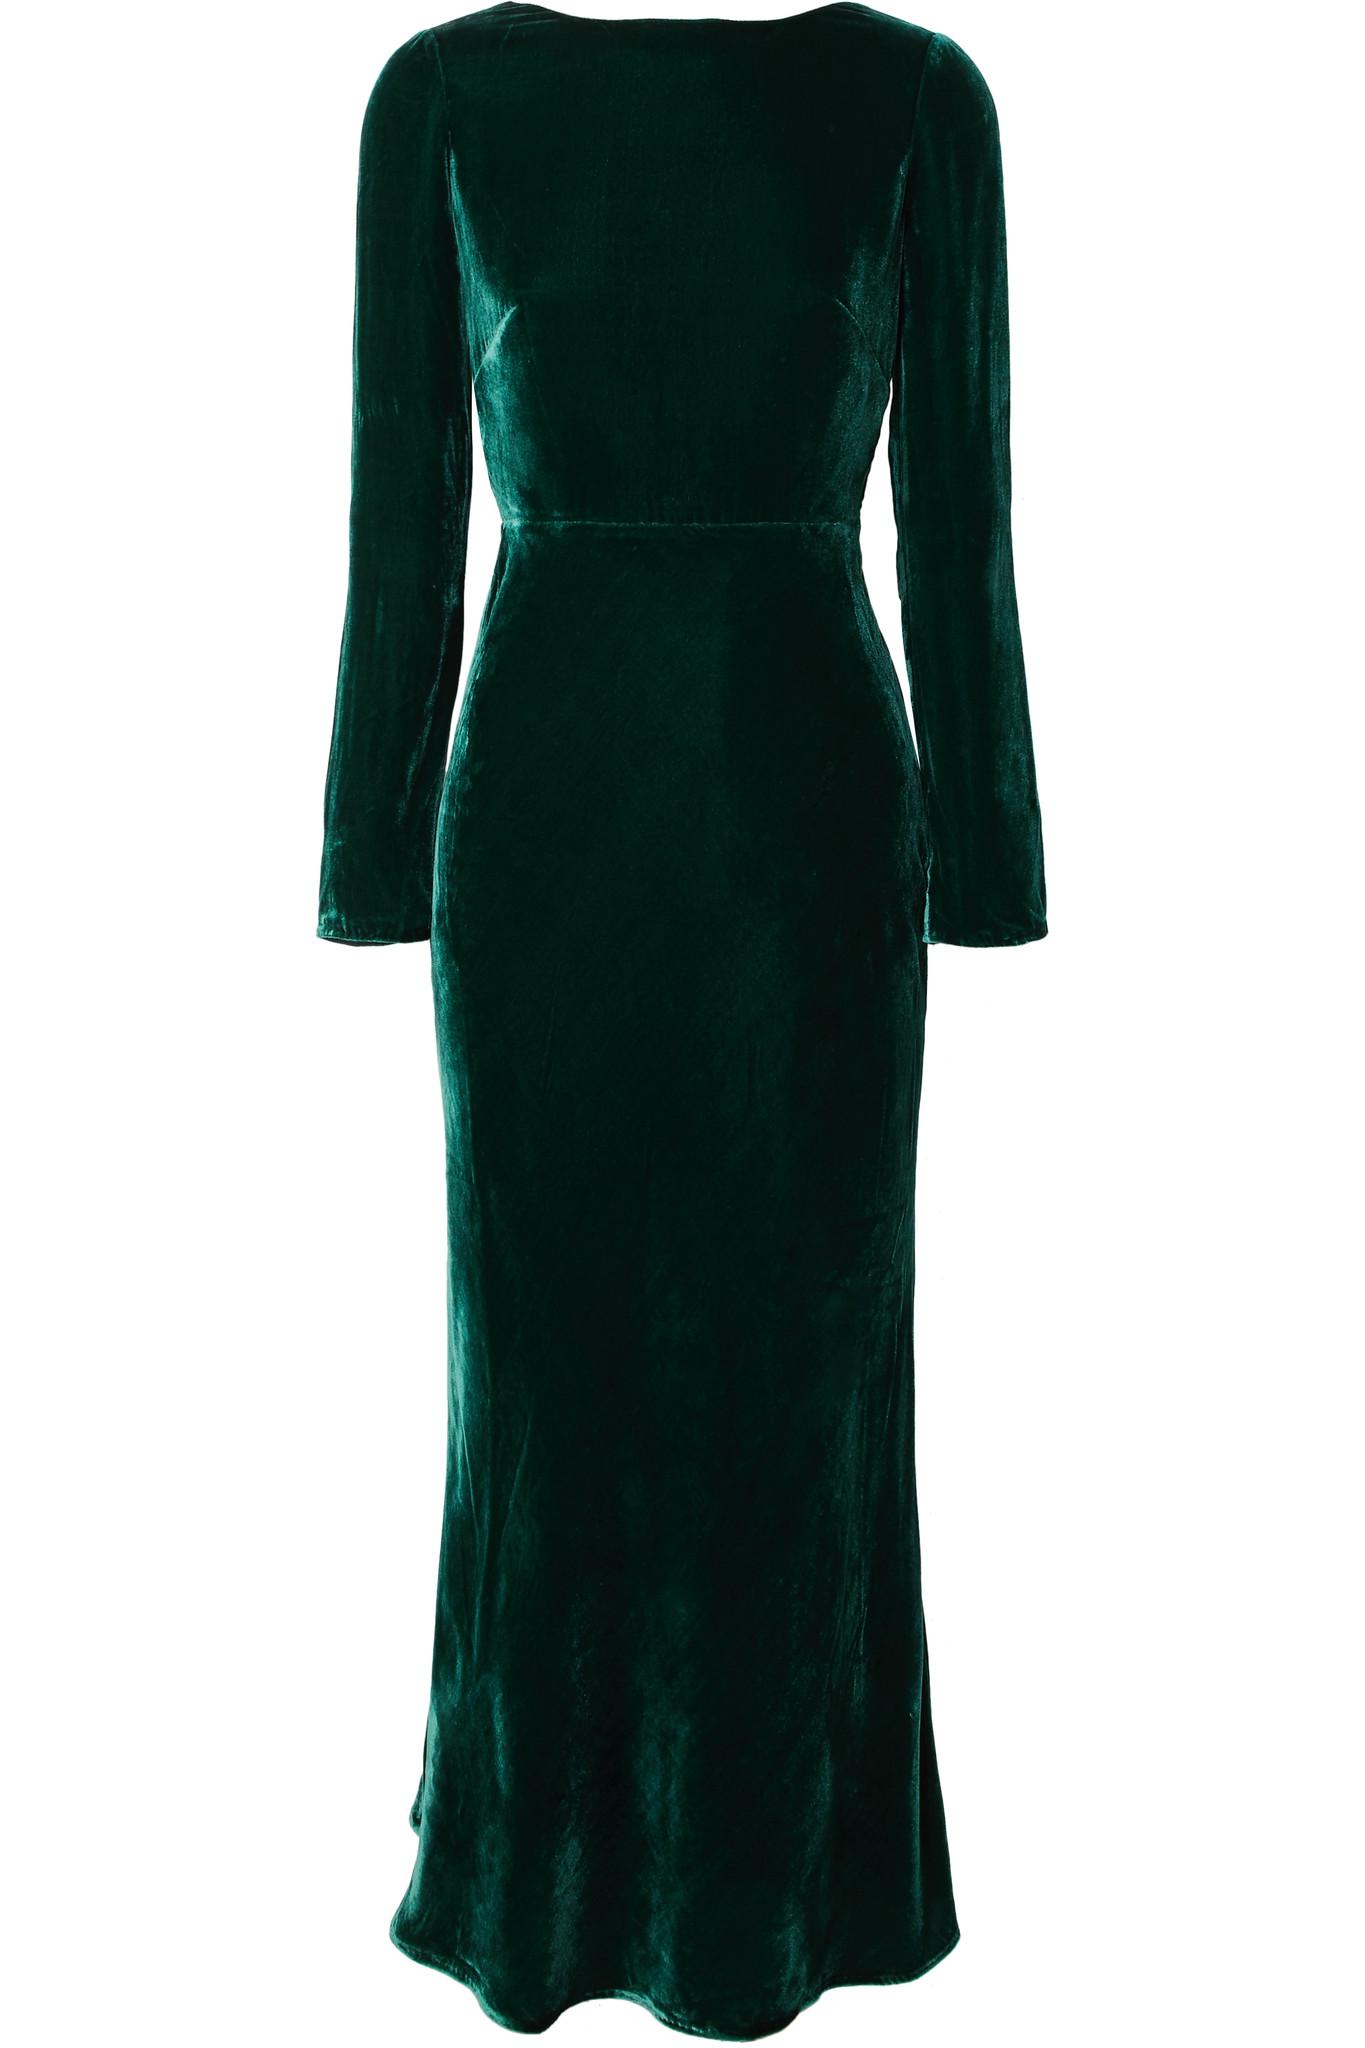 Saloni Tina Open-back Velvet Midi Dress in Dark Green (Green) - Lyst